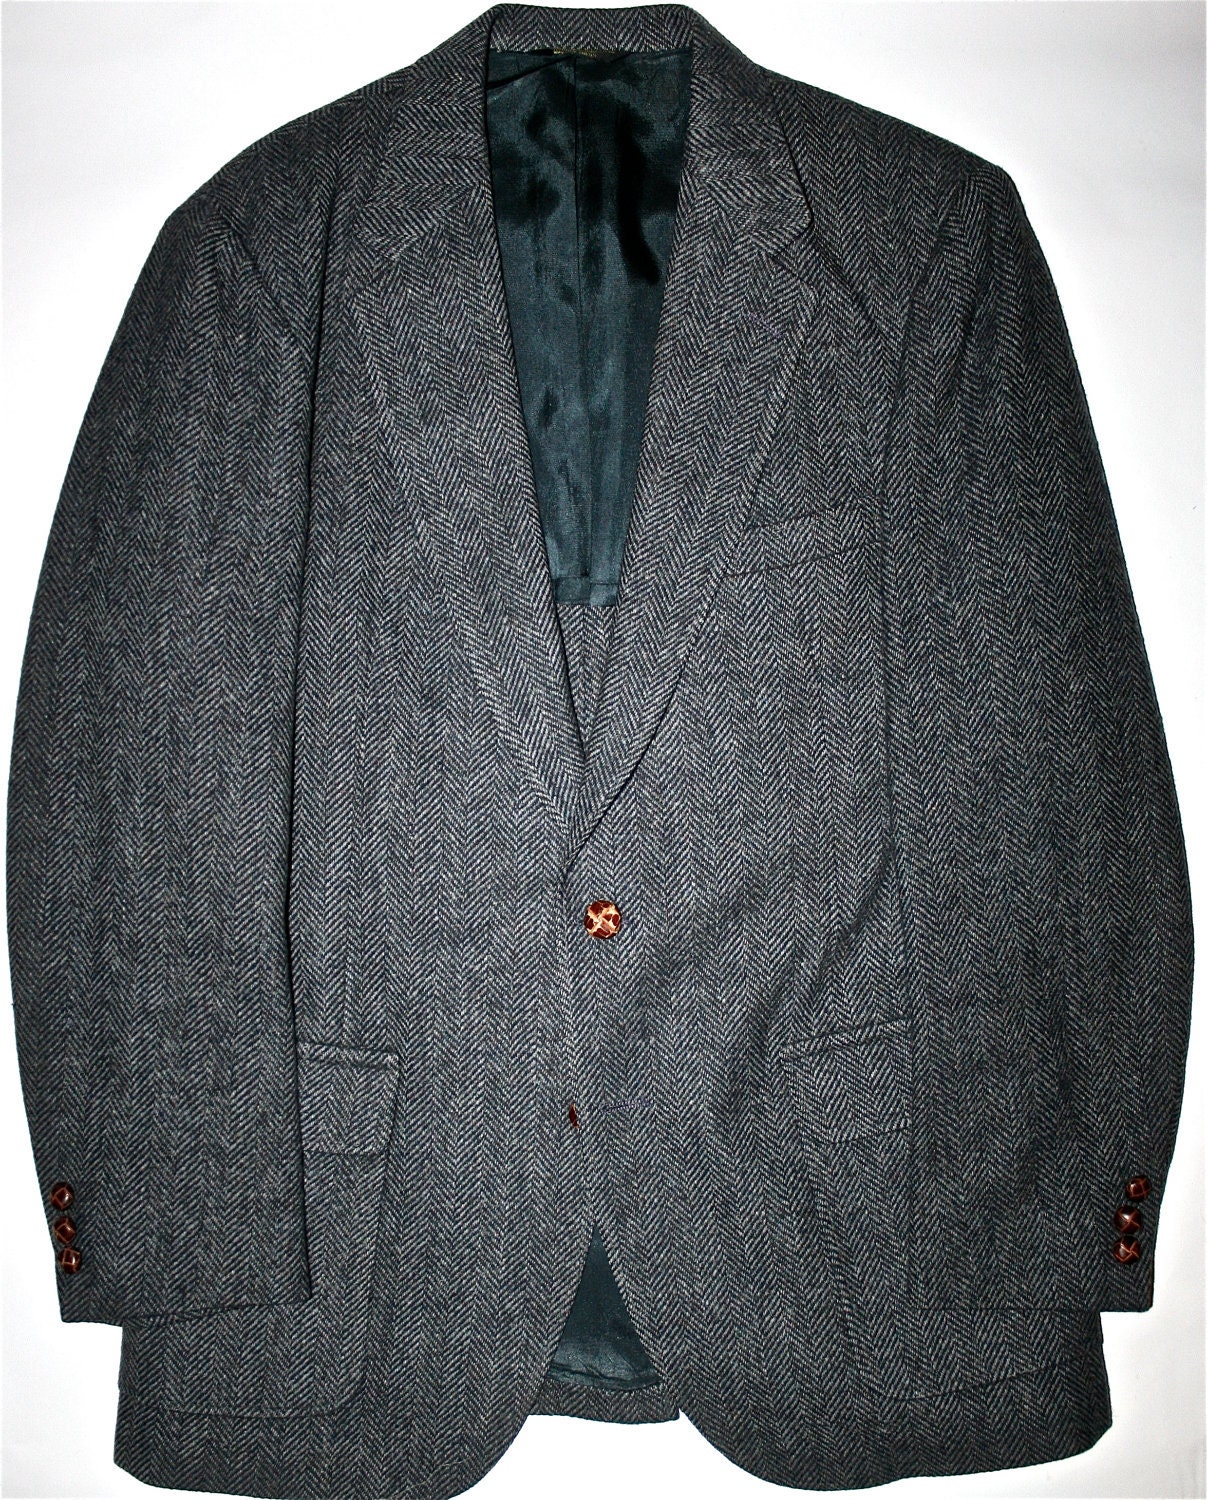 Carl Michaels Tweed Sport Coat Blazer Jacket Made Expressly | Etsy